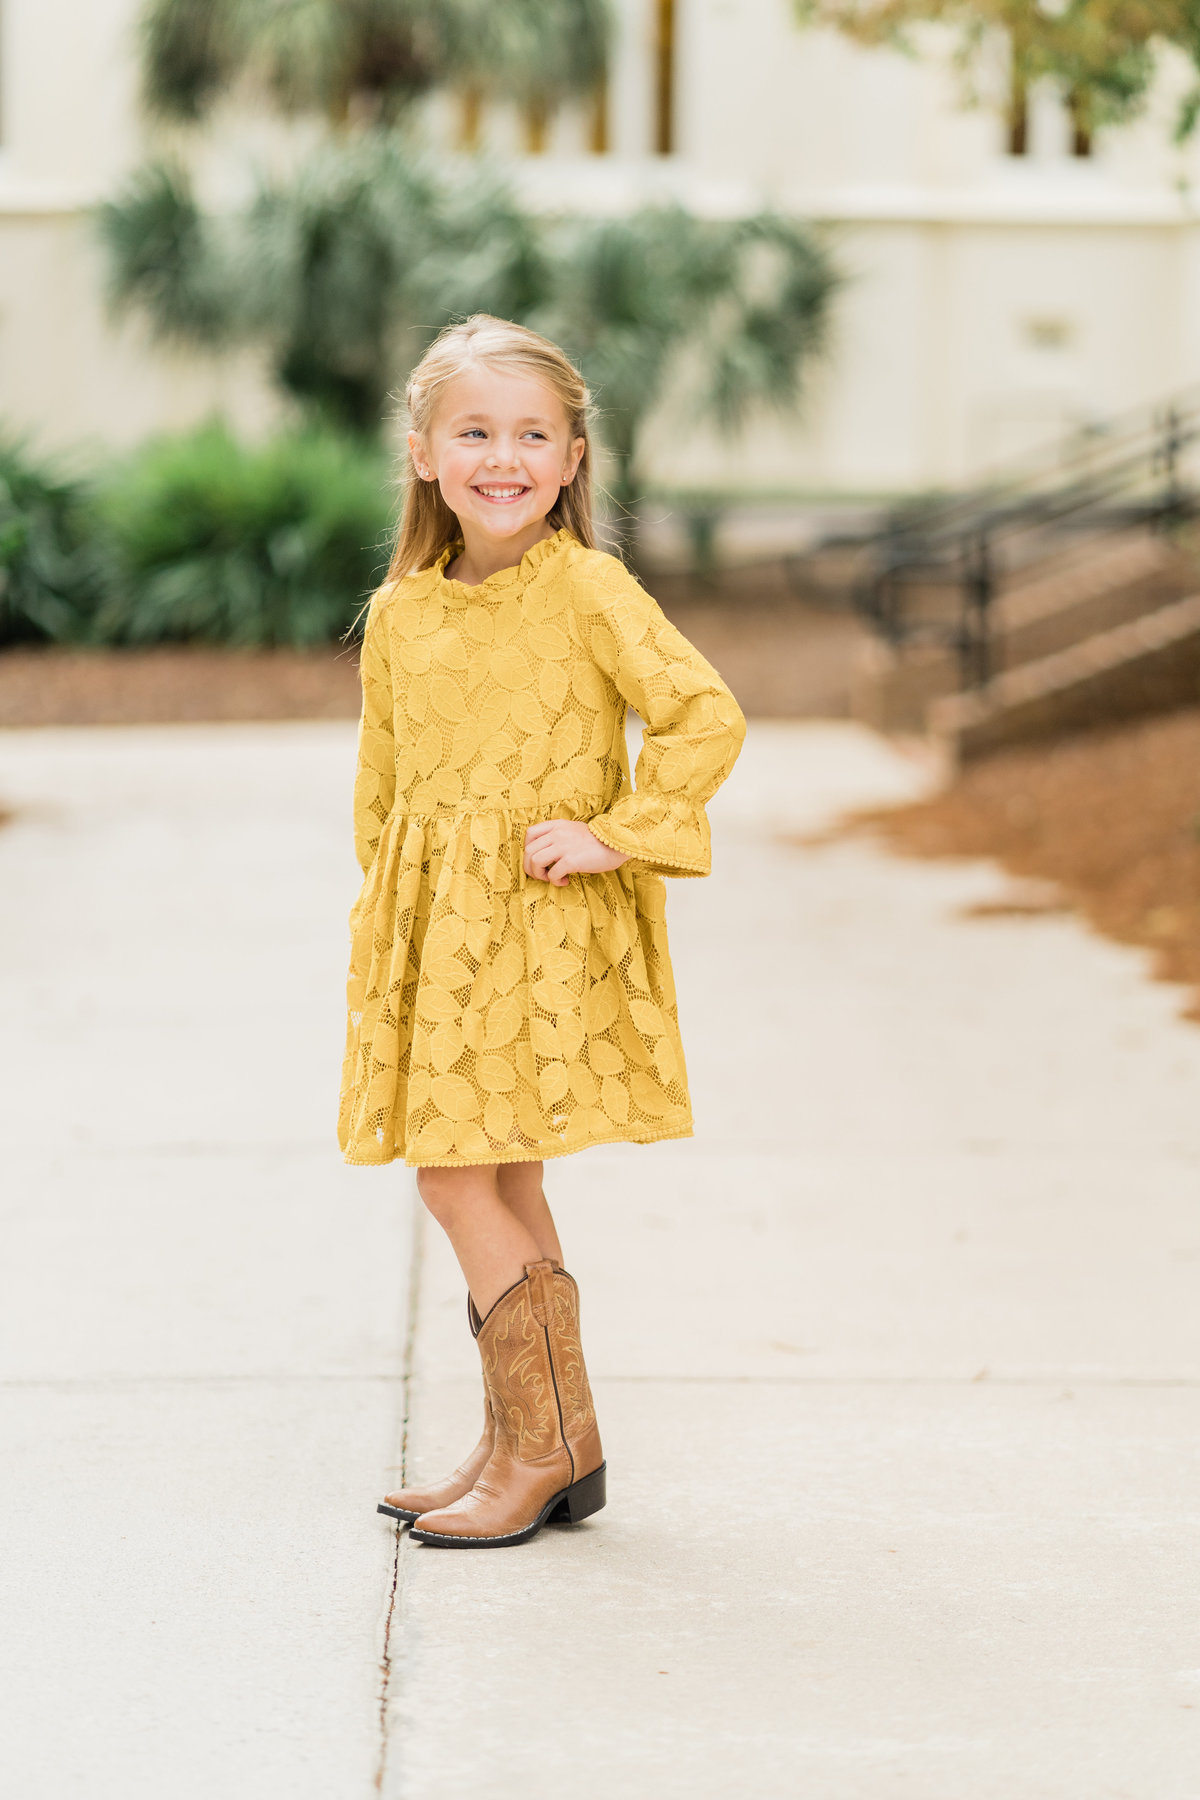 Girl in yellow dress in park in Alabama